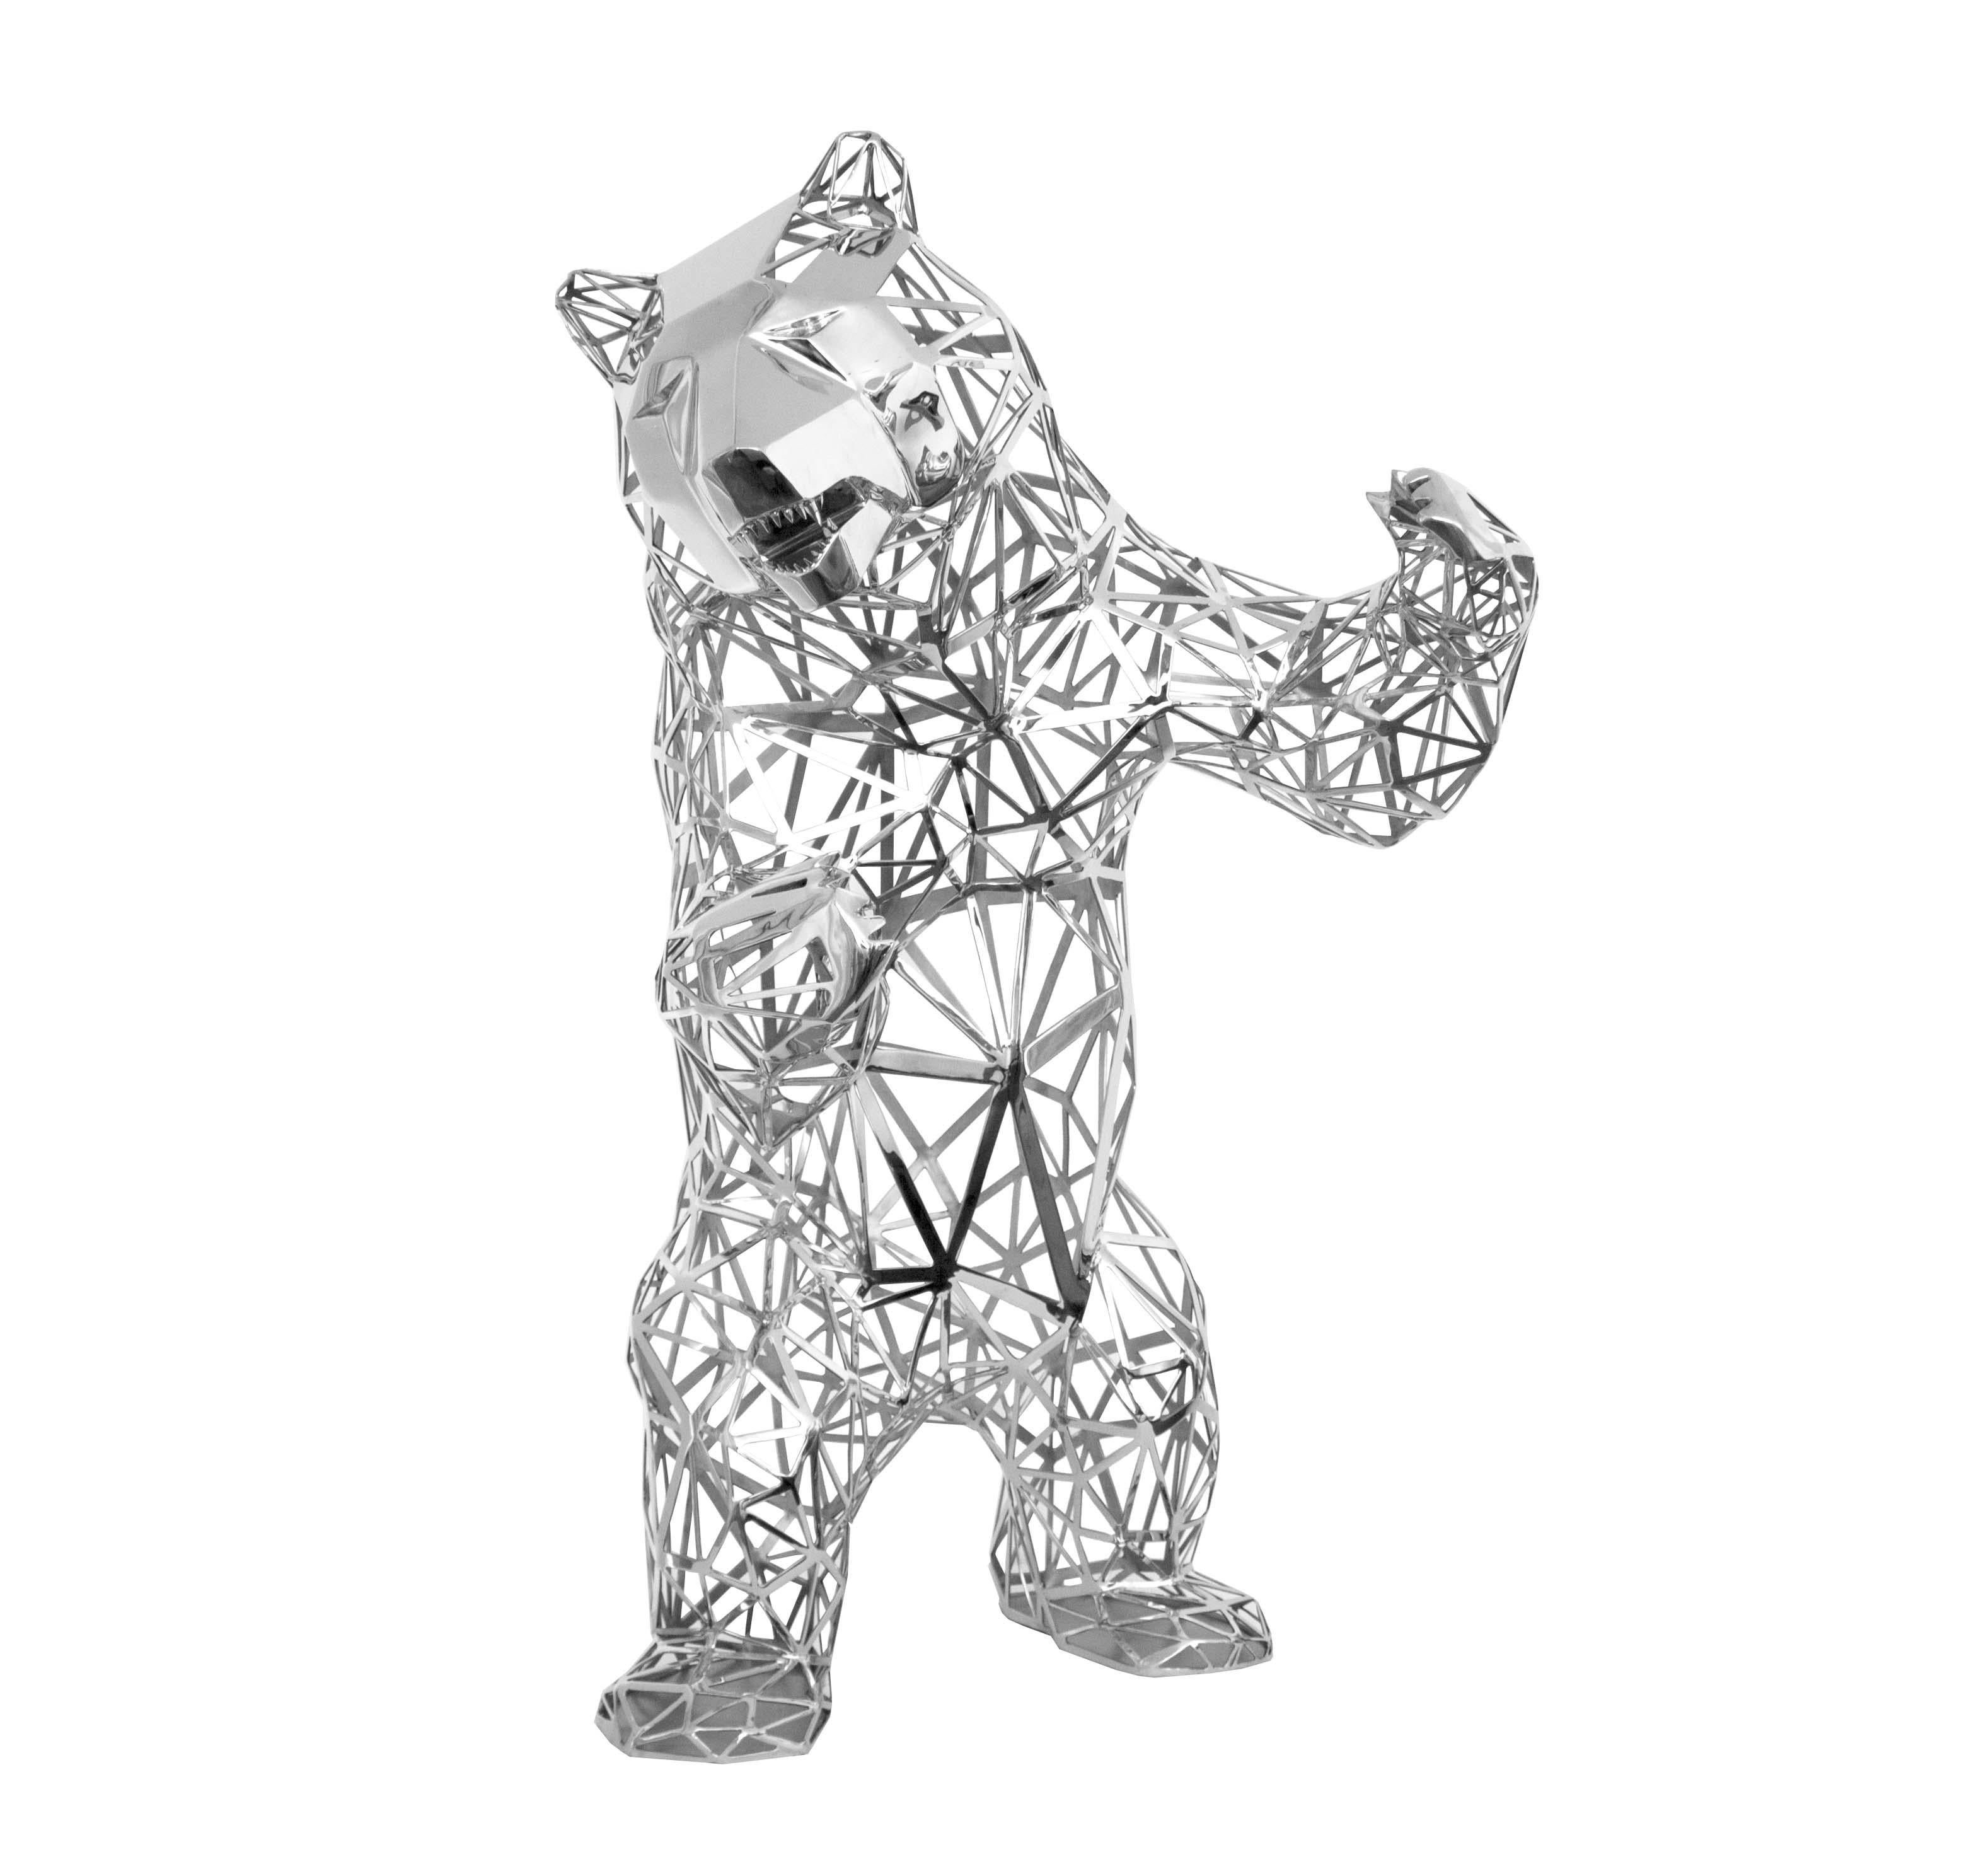 Standing Bear 130 cm - Stainless Steel - Sculpture by Richard Orlinski